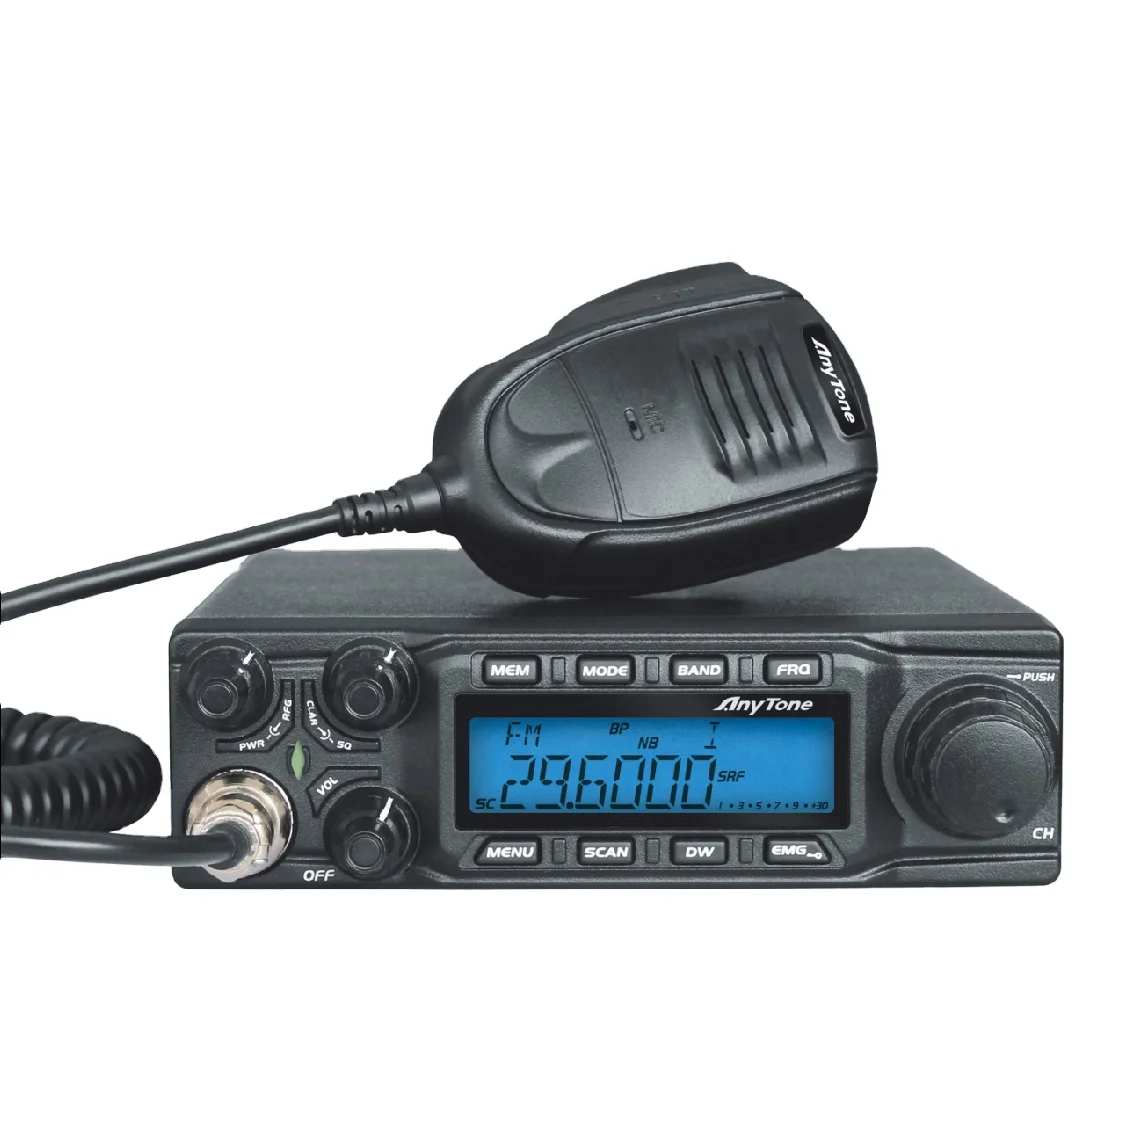 

10 Meter Radio AT-6666 AnyTone 60W Mobile Transceiver Two Way Radio10 meter 28.000-29.700MHz High Power CB Radio